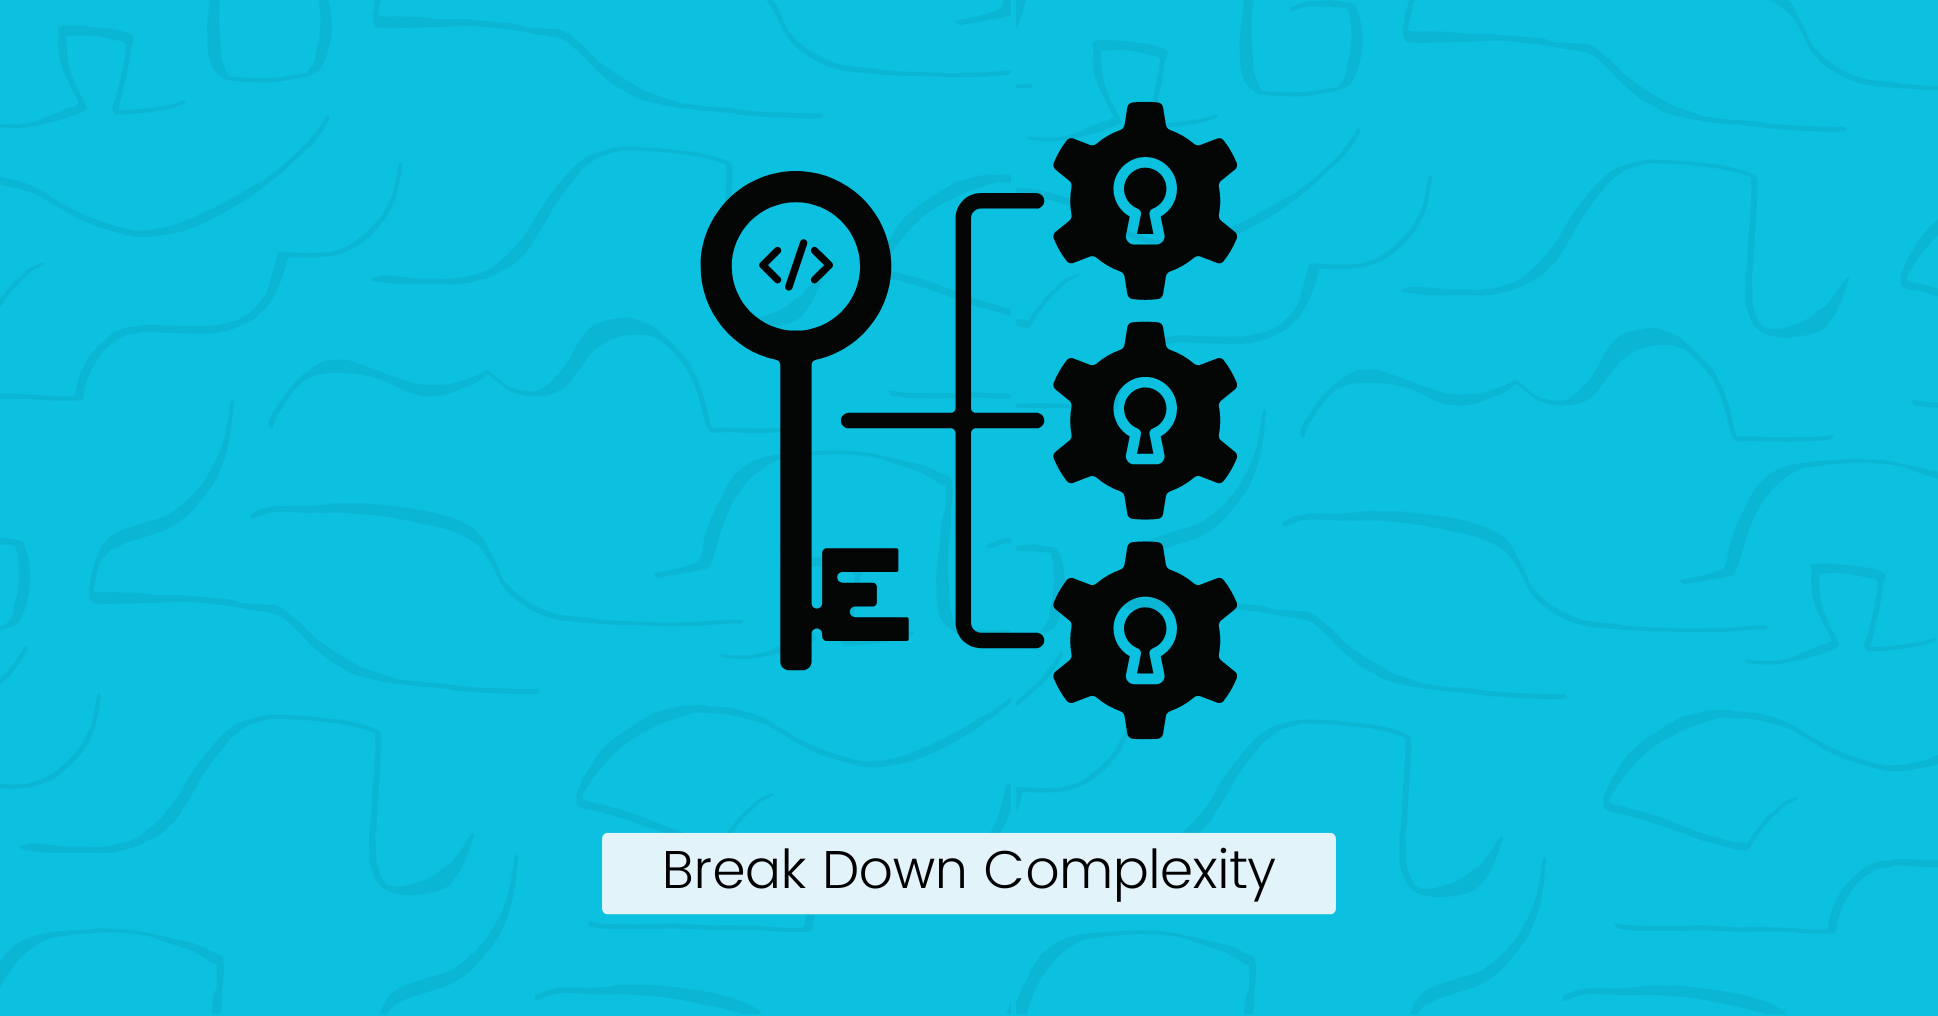 Break Down Complexity